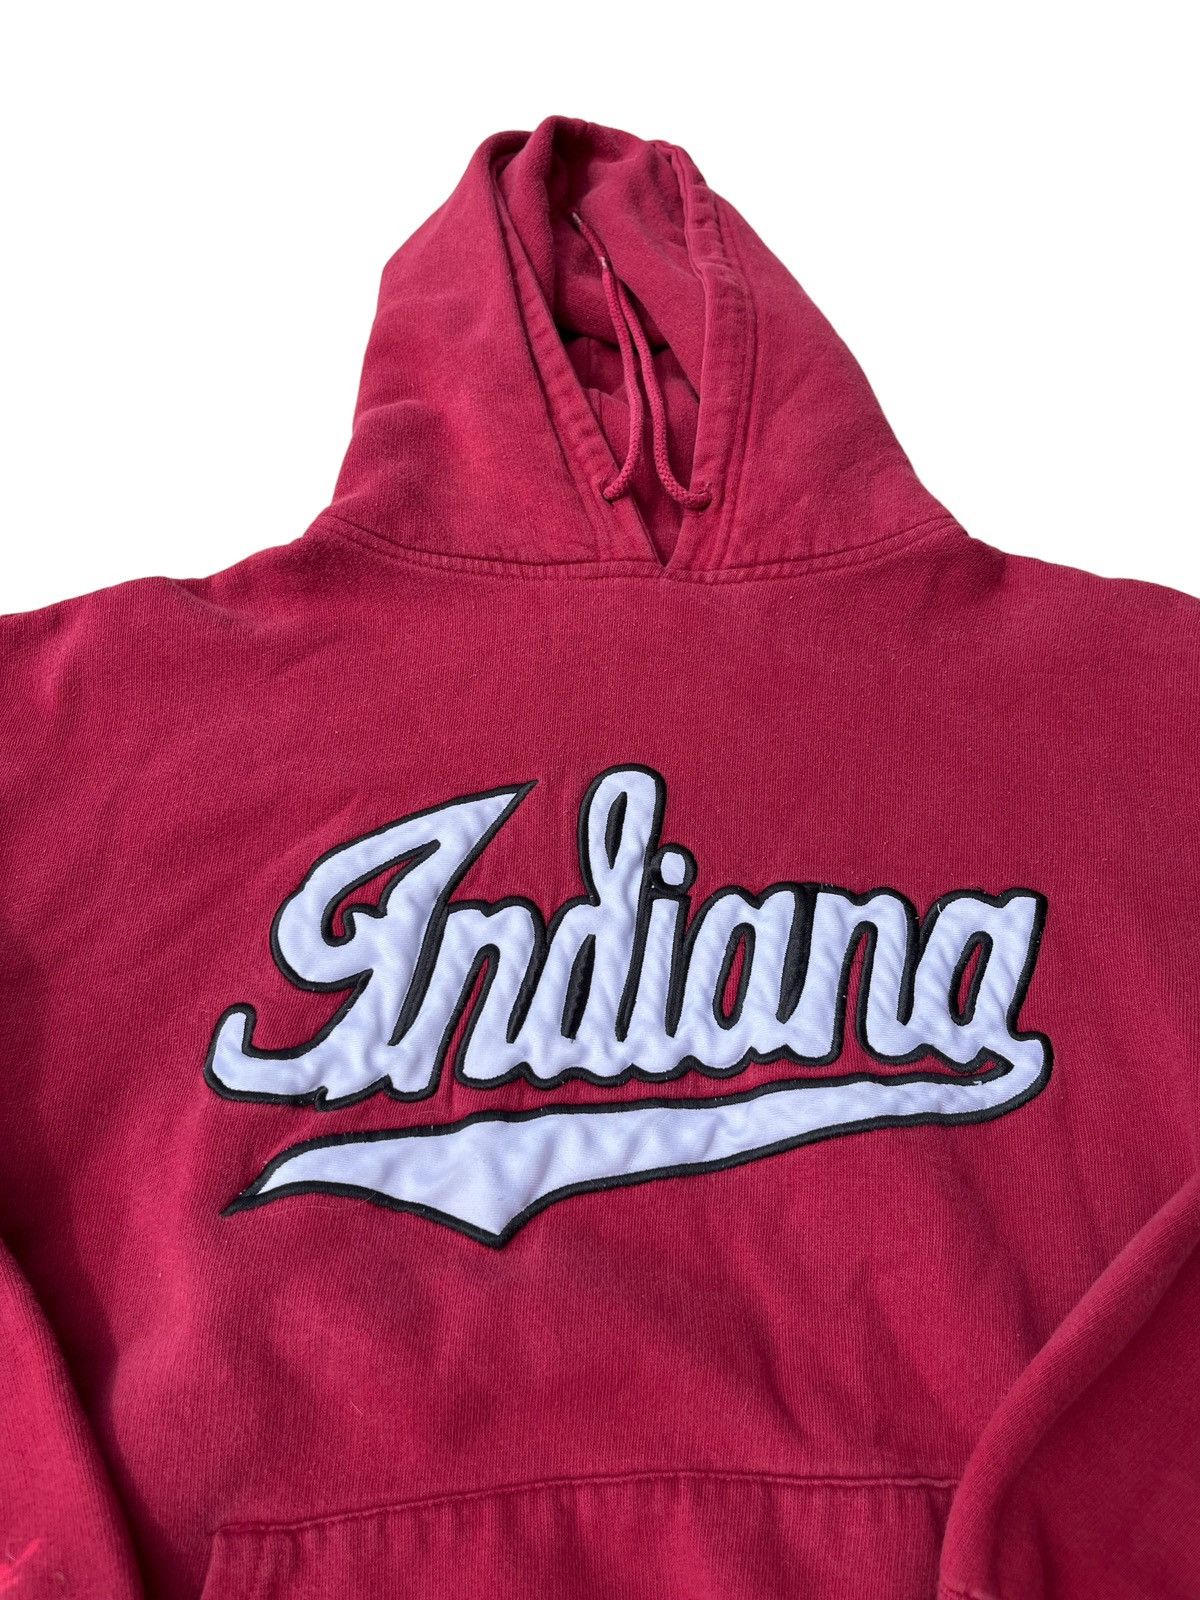 Vintage Vintage Indiana Hoodie Size US L / EU 52-54 / 3 - 2 Preview